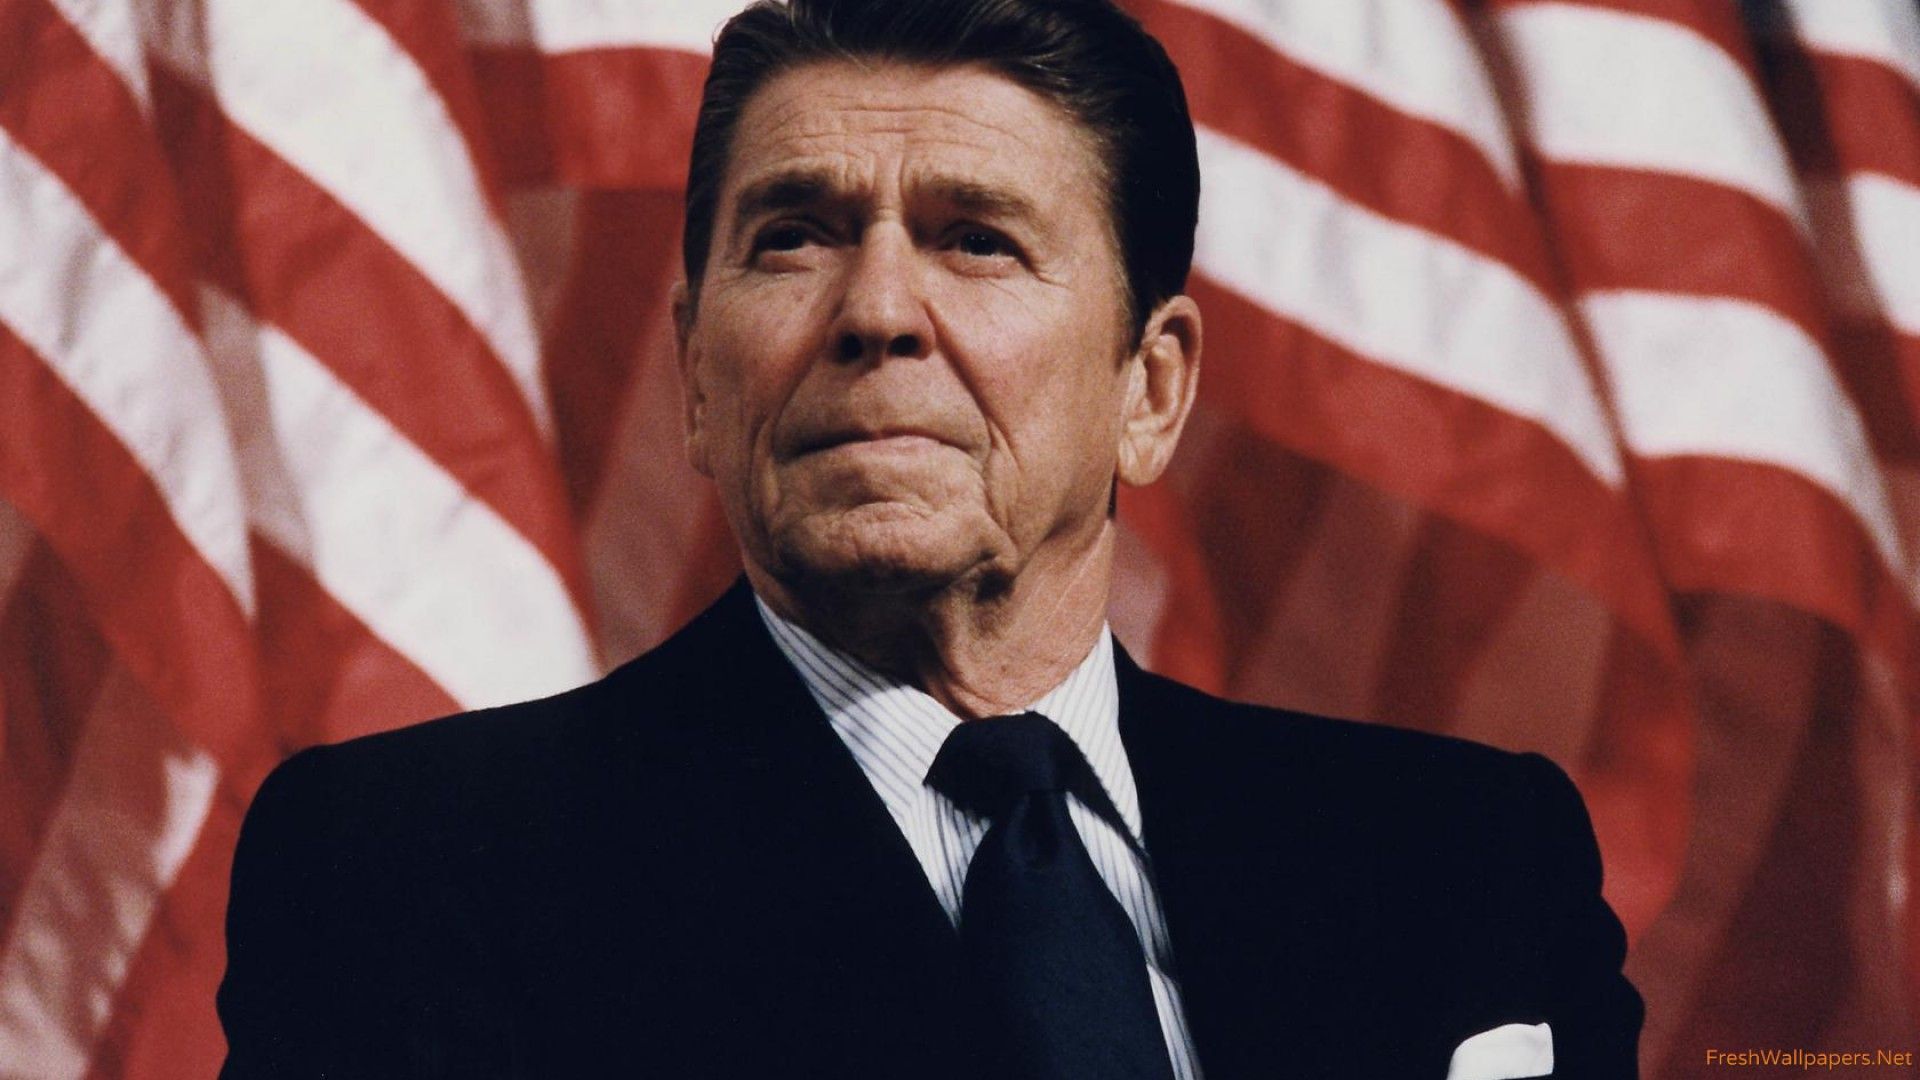 Ronald Reagan President wallpapers | Freshwallpapers